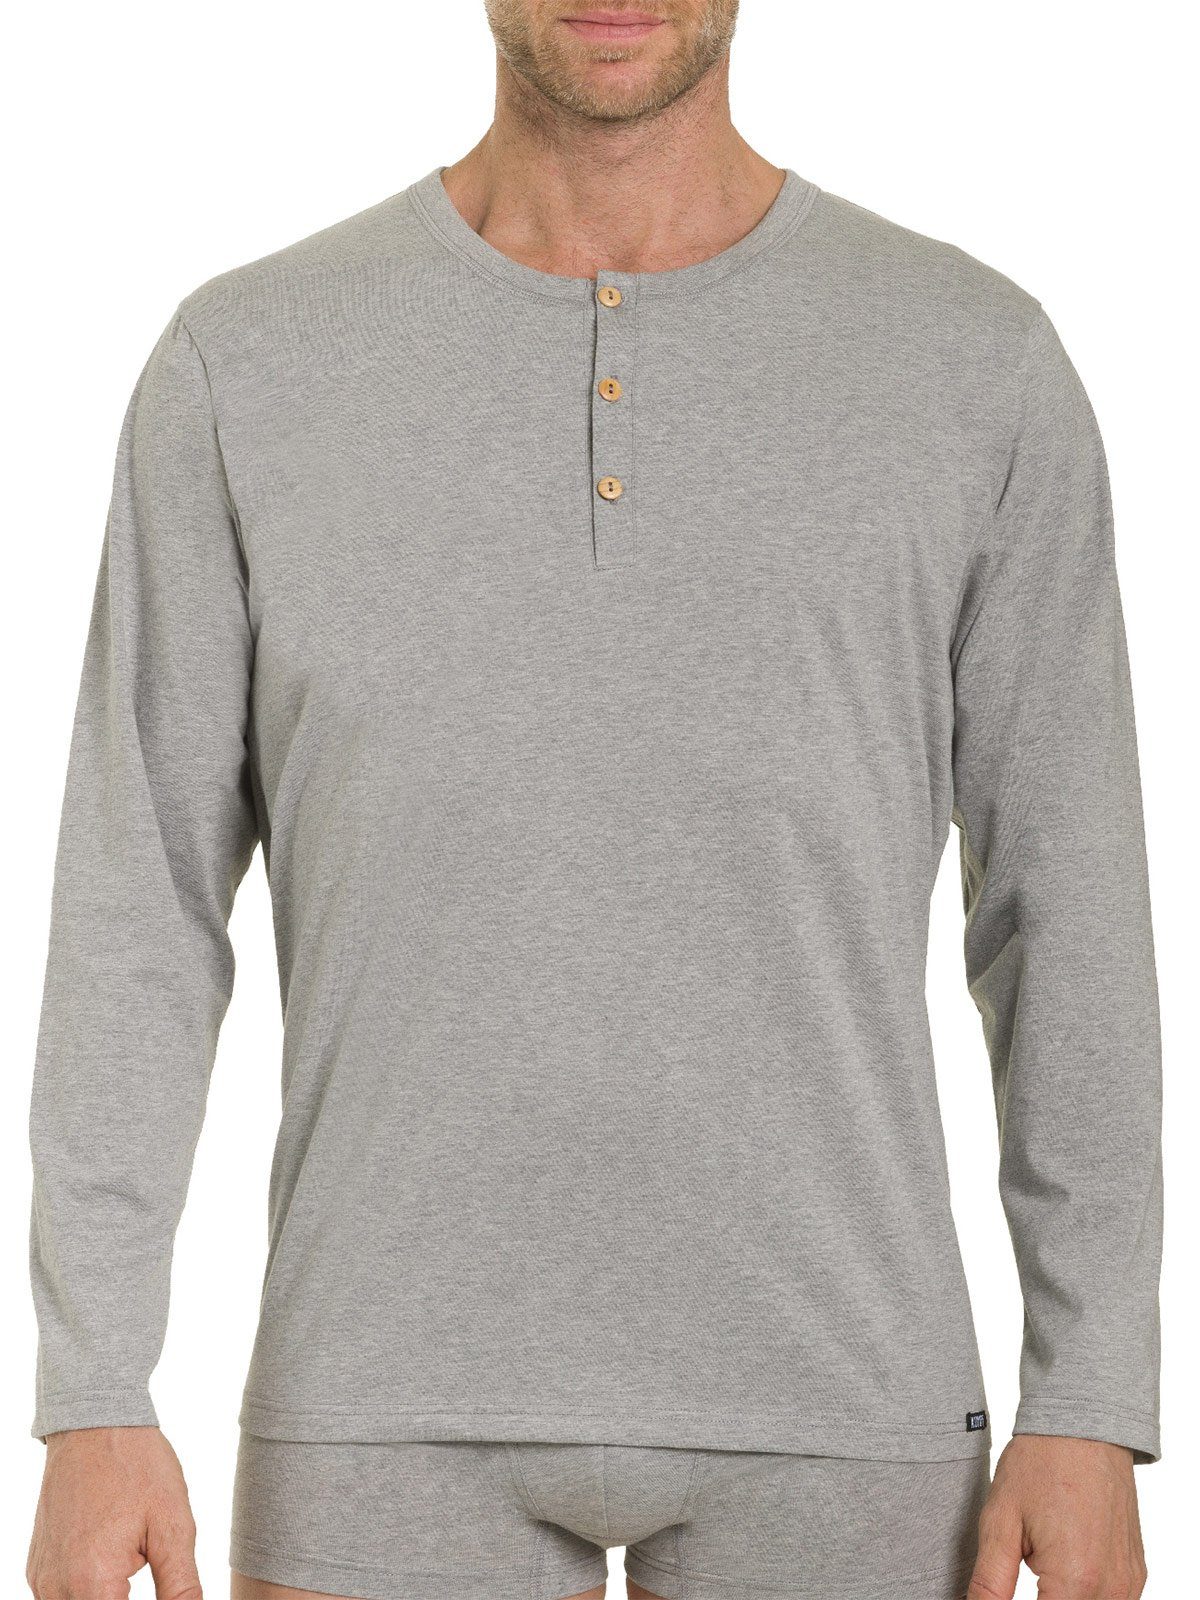 Markenqualität langarm 1-St) Herren Cotton Bio Unterhemd stahlgrau-melange KUMPF hohe Shirt (Stück,